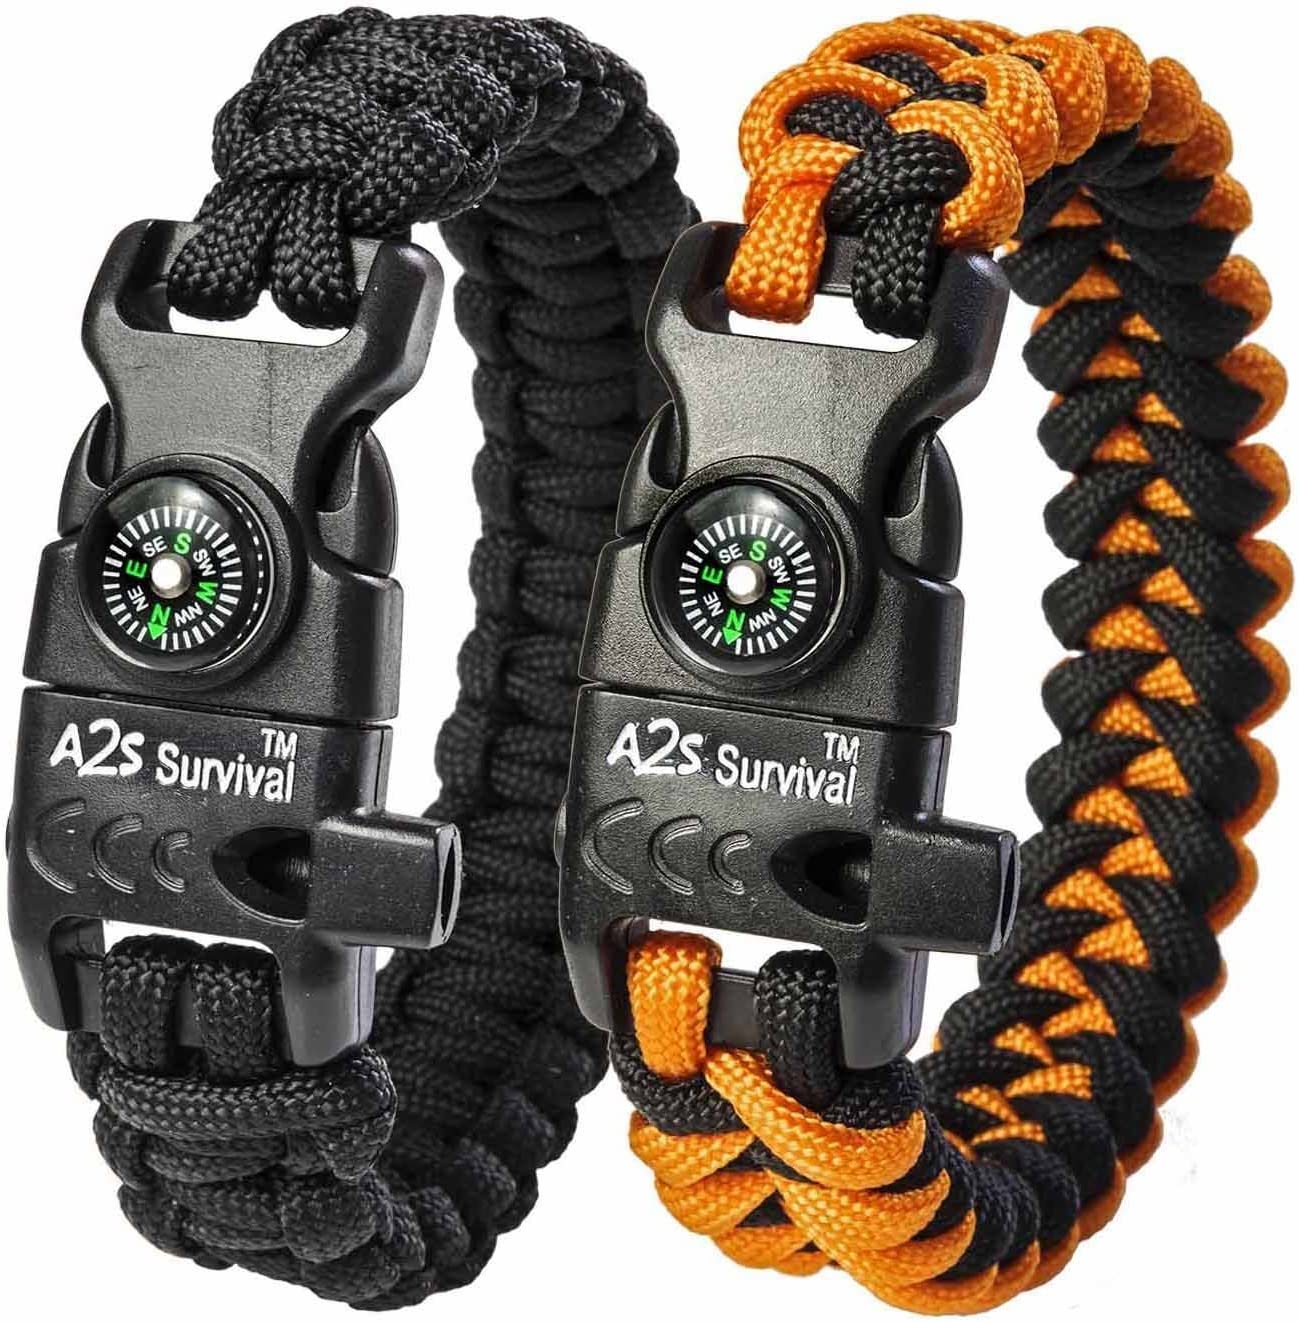 Paracord Bracelet K2-Peak – Survival Bracelets with Embedded Compass Whistle EDC Hiking Gear- Camping Gear Survival Gear Emergency Kit